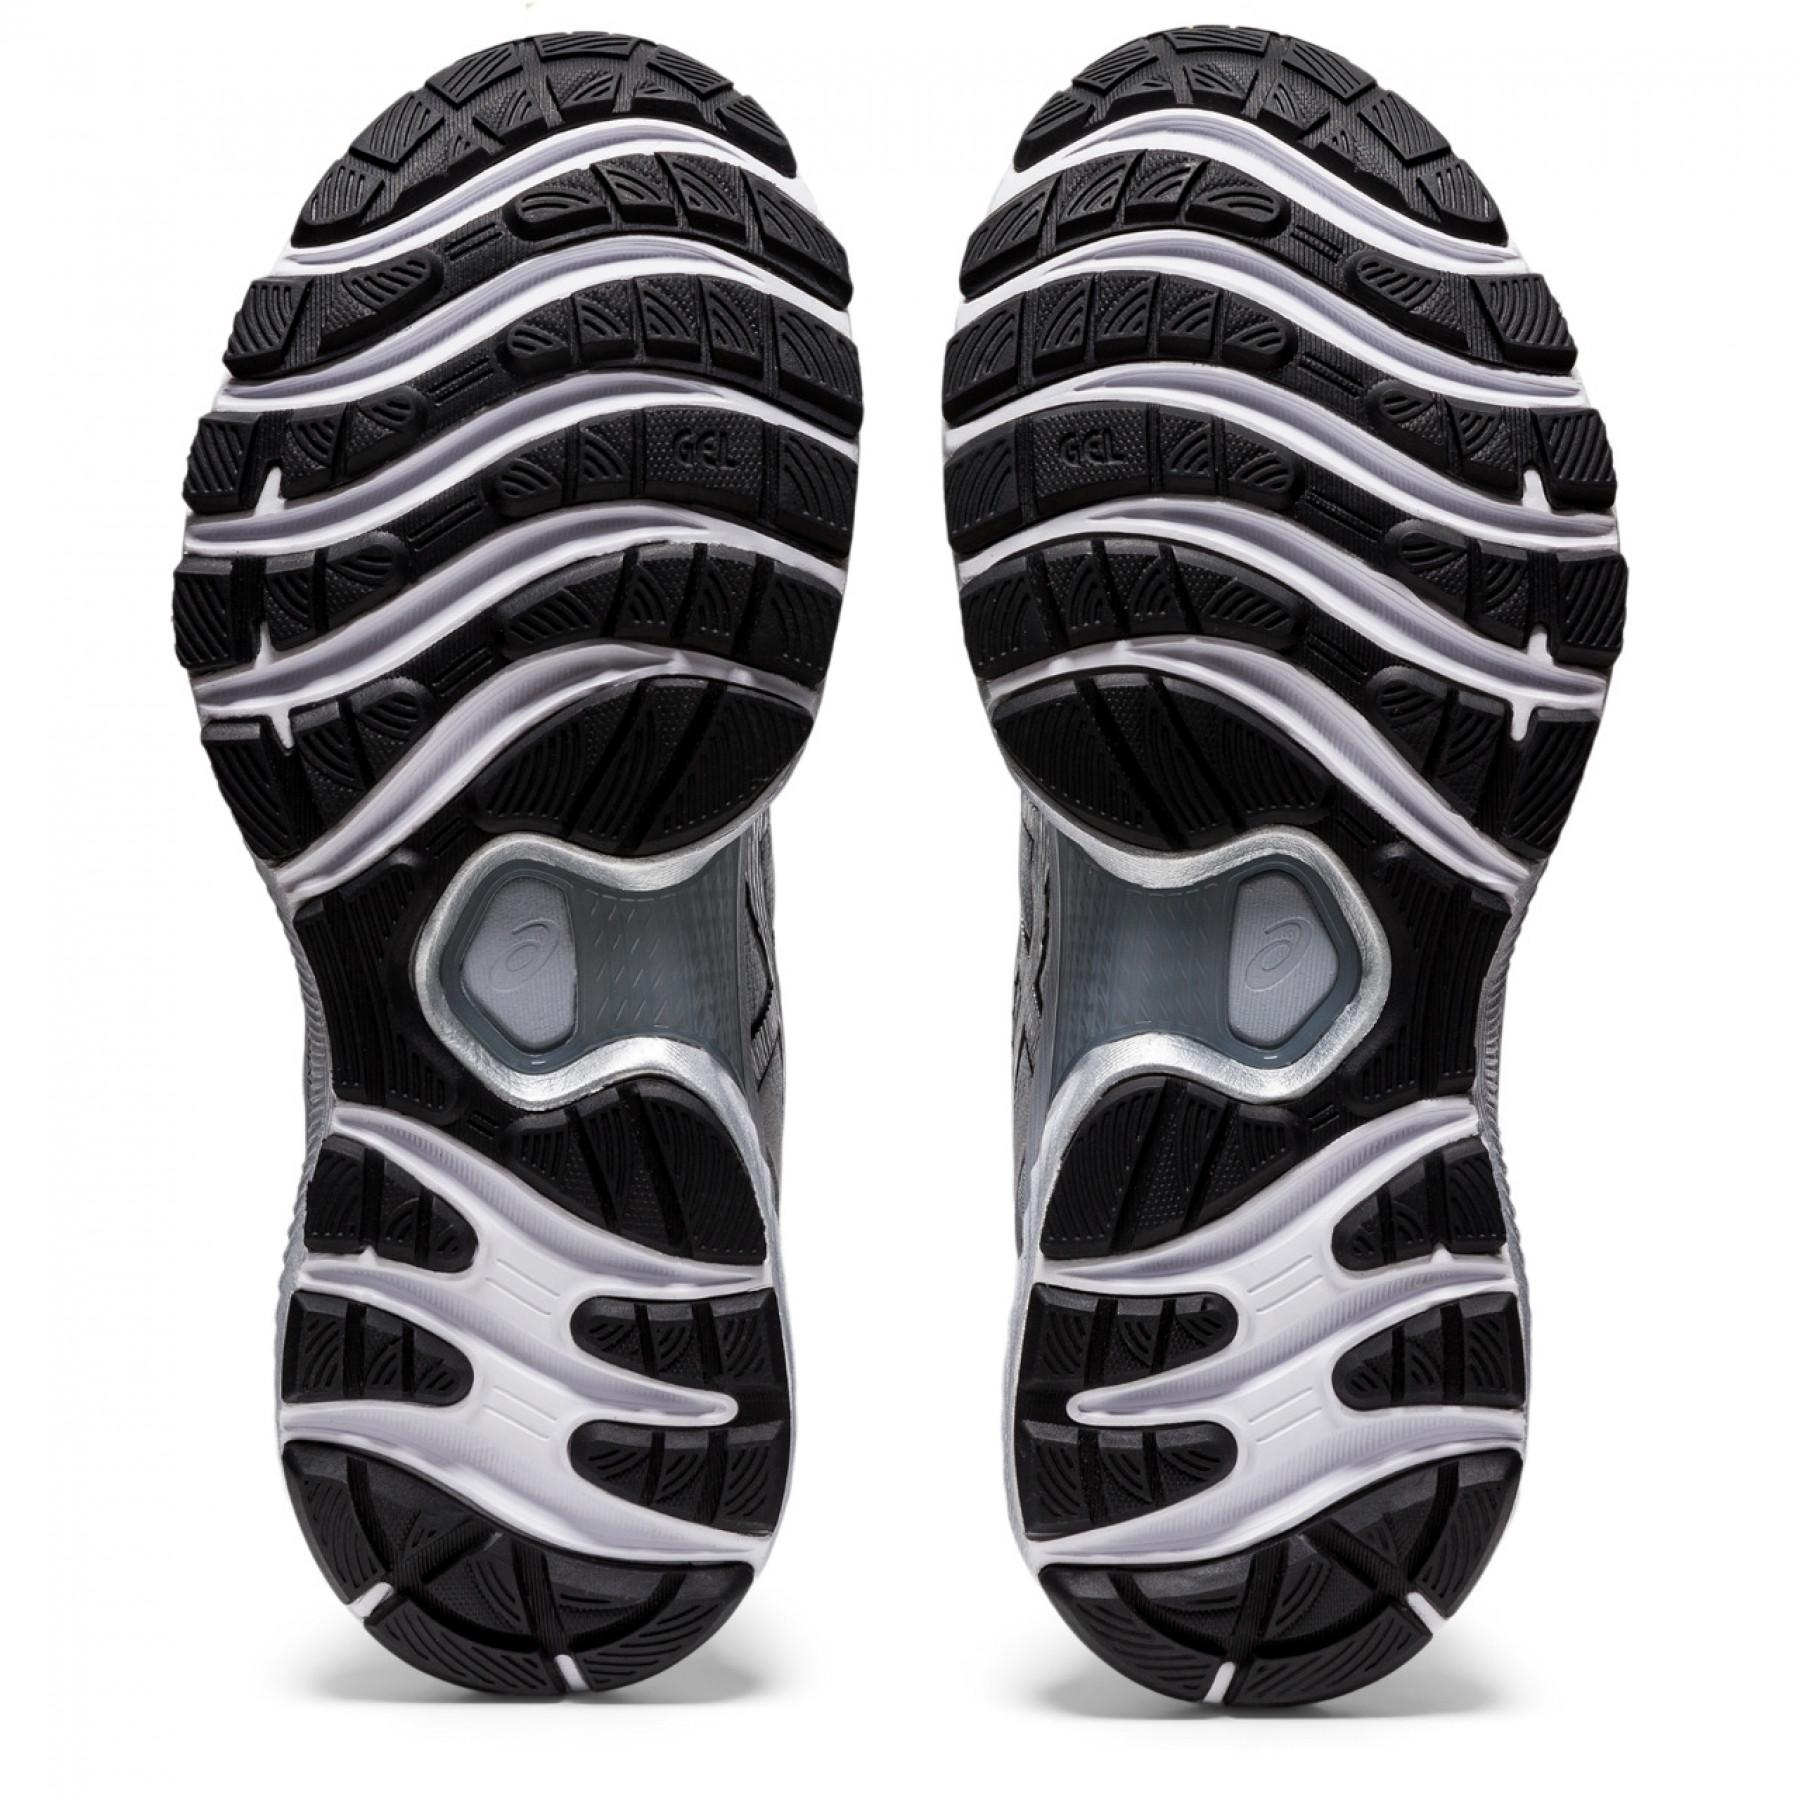 Zapatos de mujer Asics Gel-Nimbus 22 Platinum